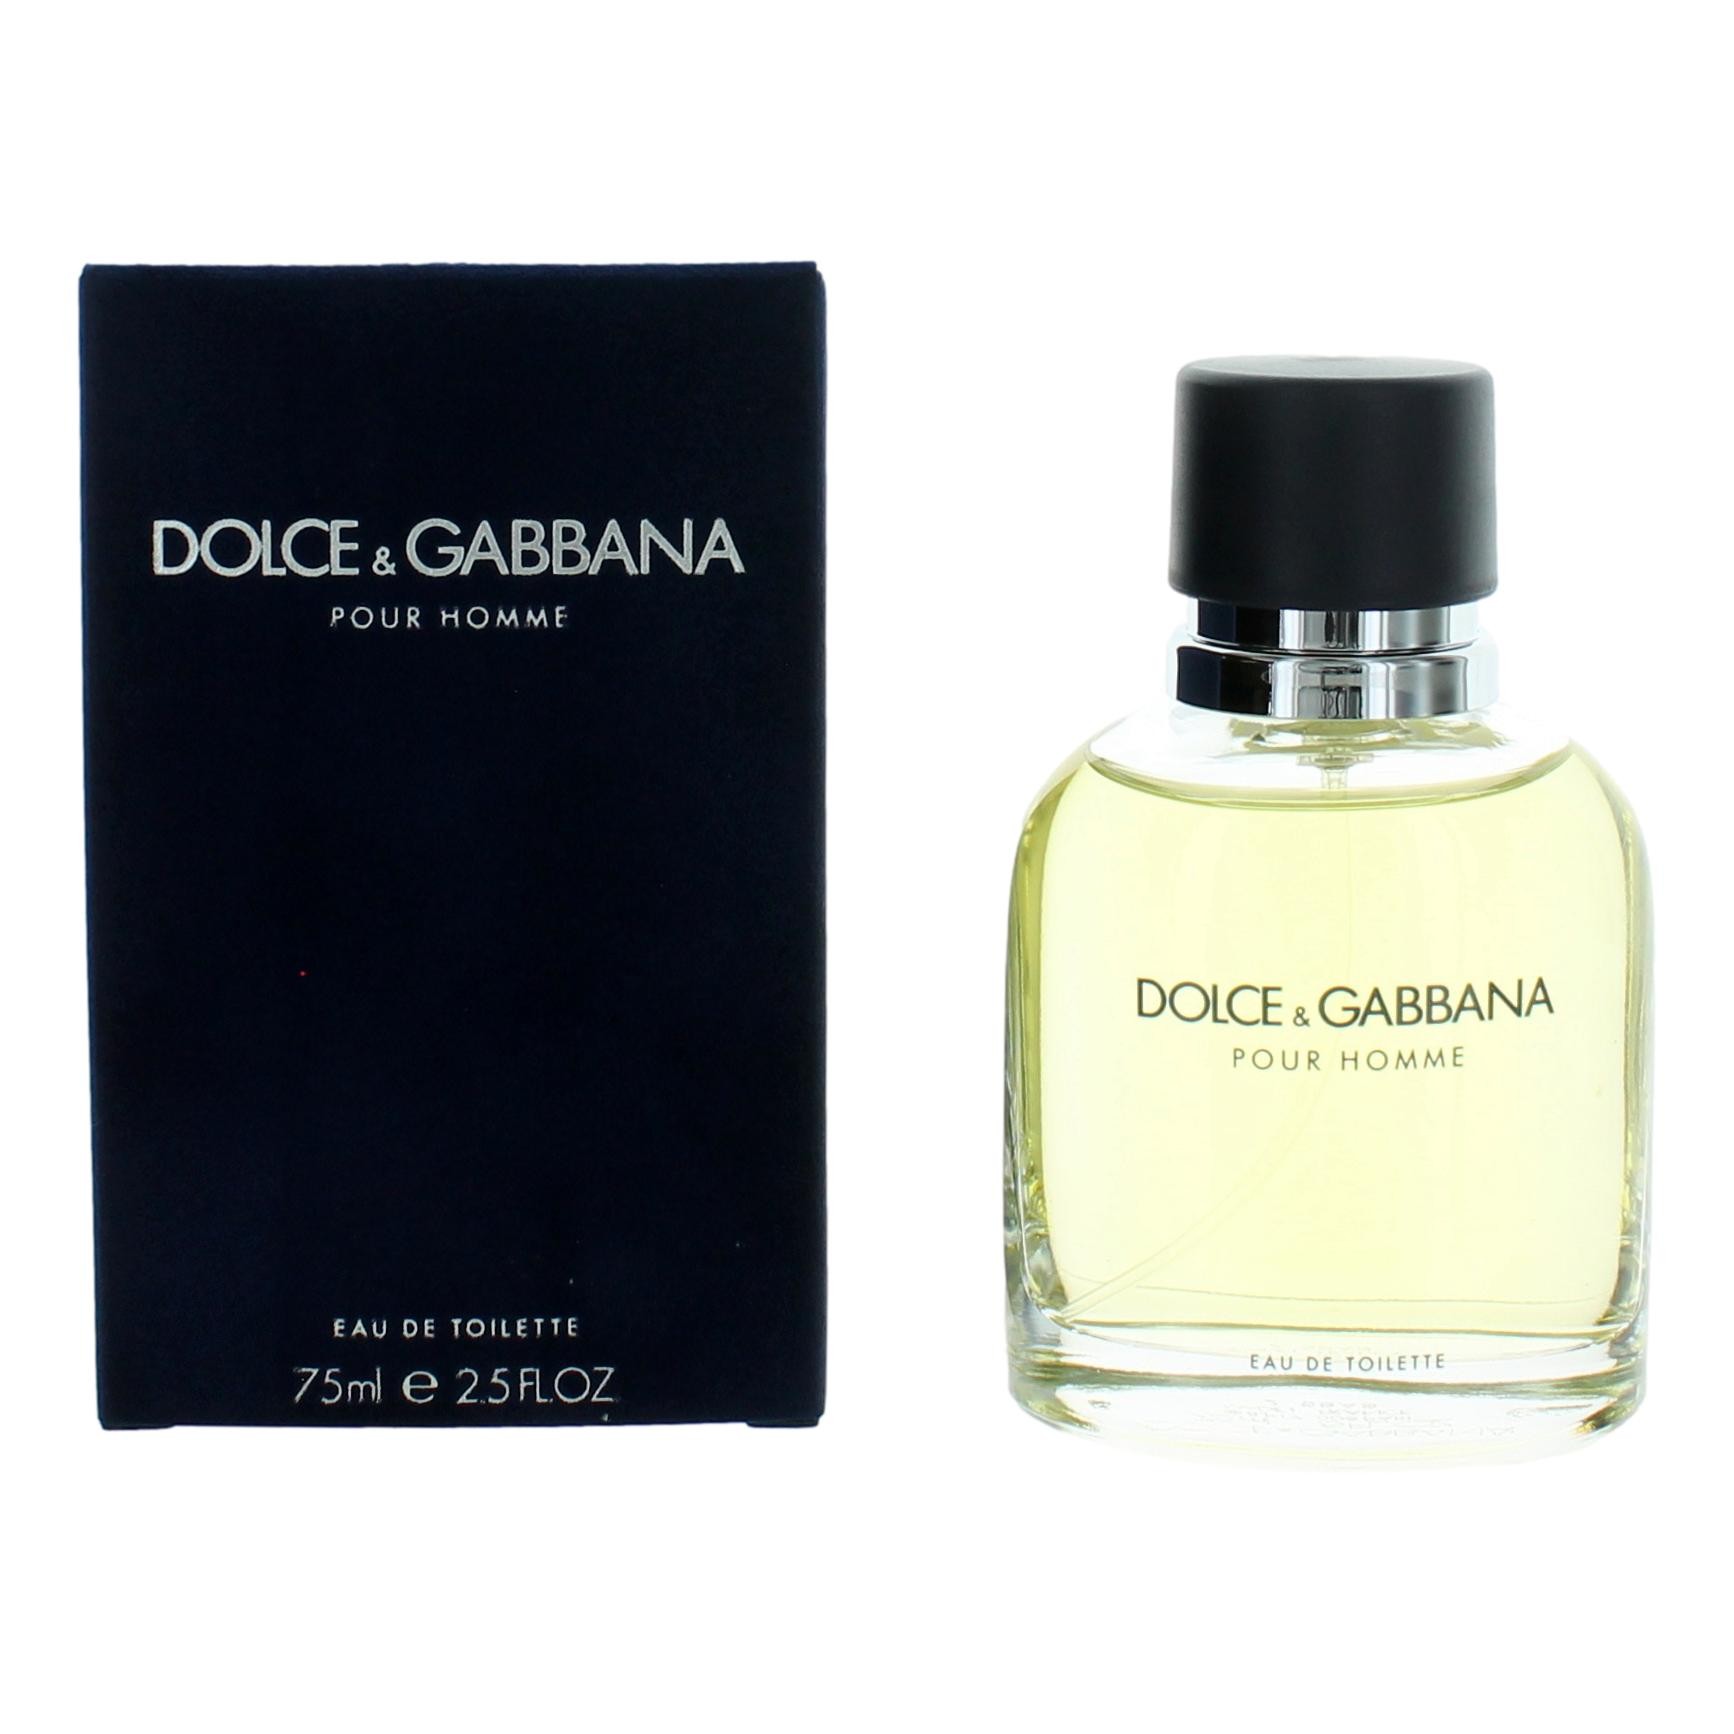 Dolce & Gabbana by Dolce & Gabbana 2.5 oz Eau De Toilette Spray for Men